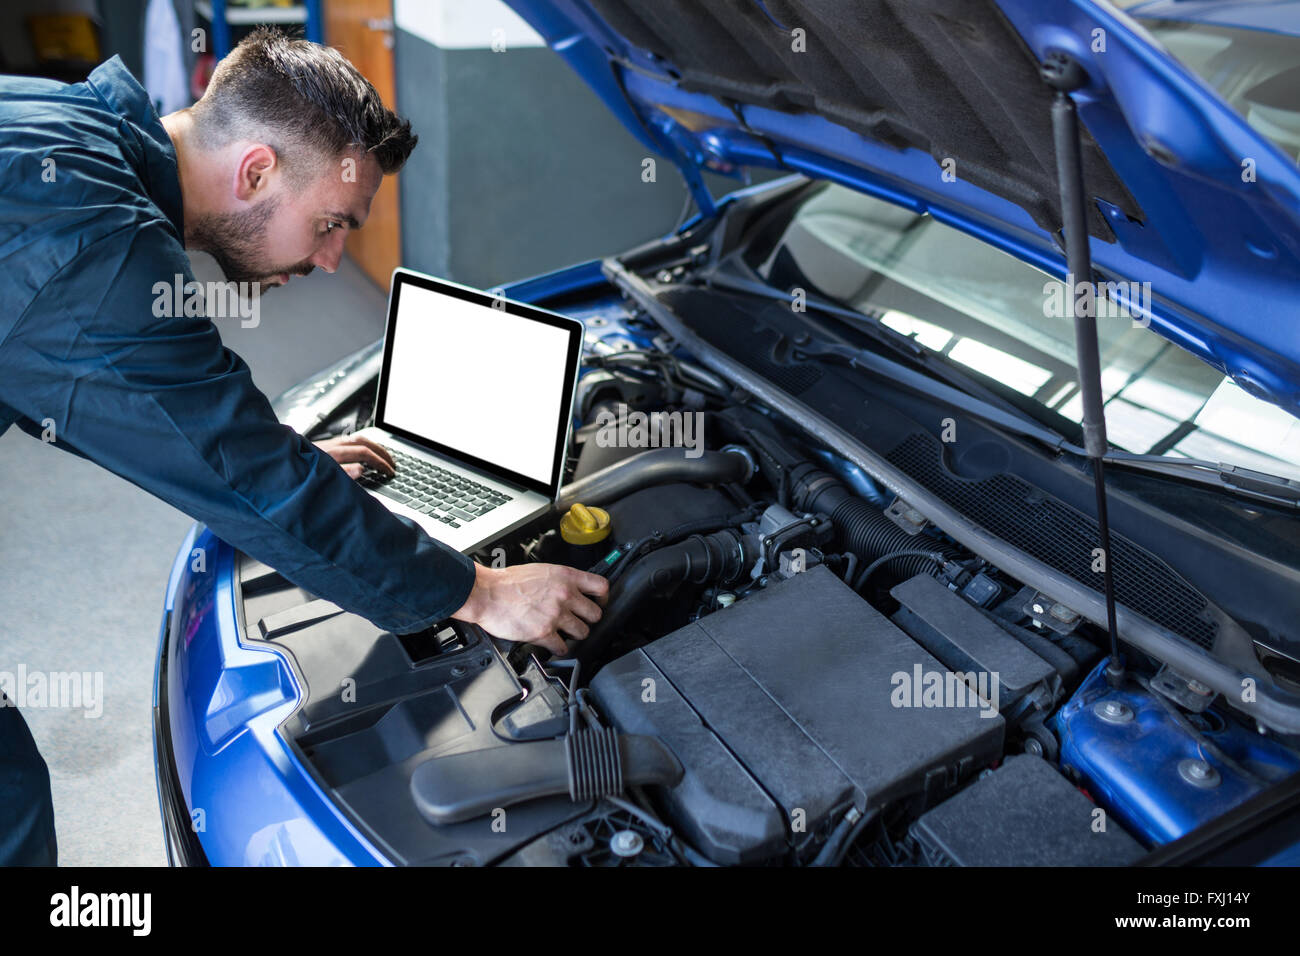 Mechanic examining car engine with help of laptop Stock Photo